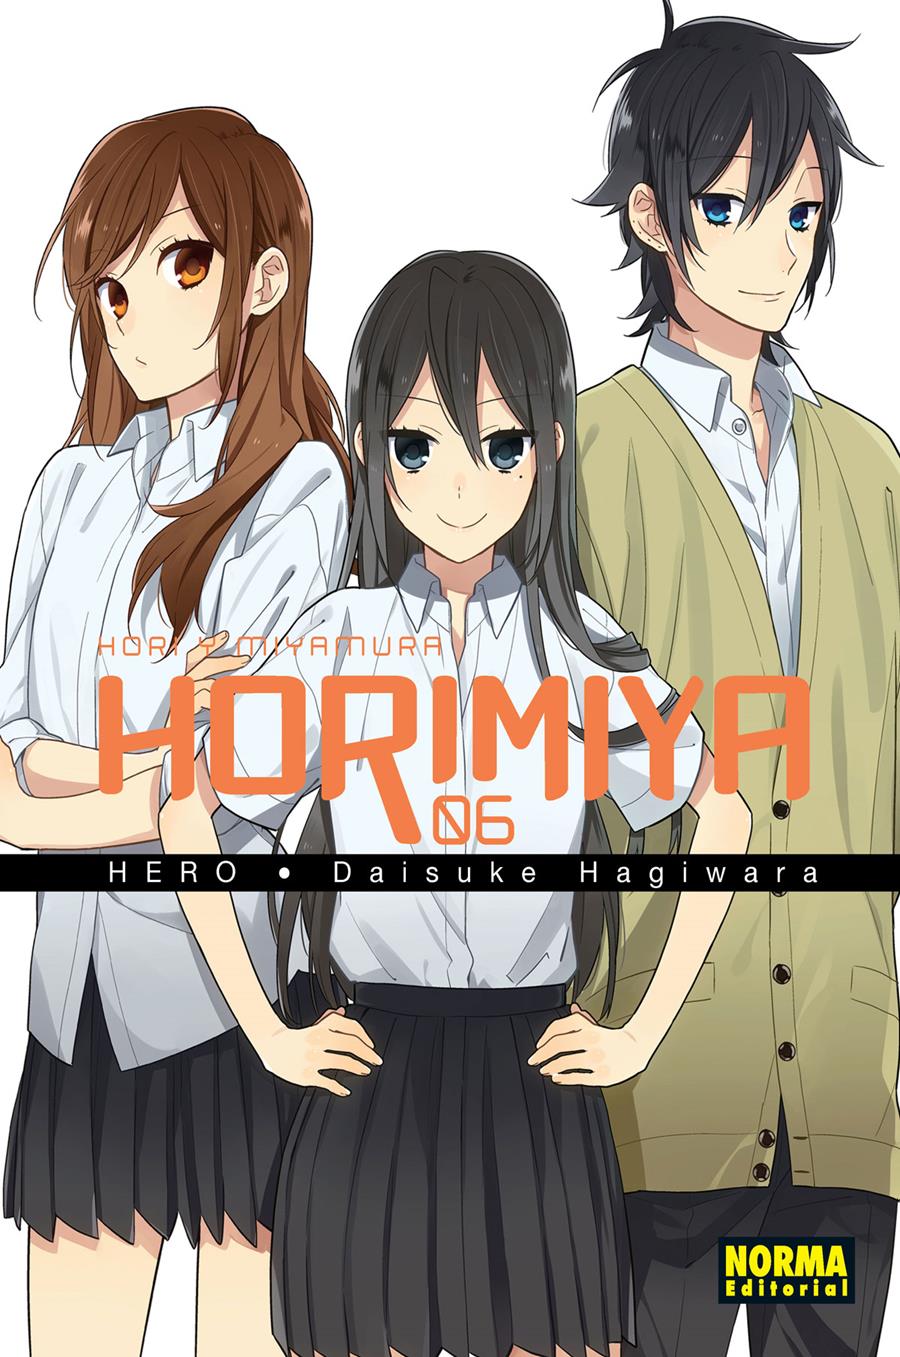 Horimiya 06 | N0718-NOR32 | HERO, Daisuke Hagiwara | Terra de Còmic - Tu tienda de cómics online especializada en cómics, manga y merchandising